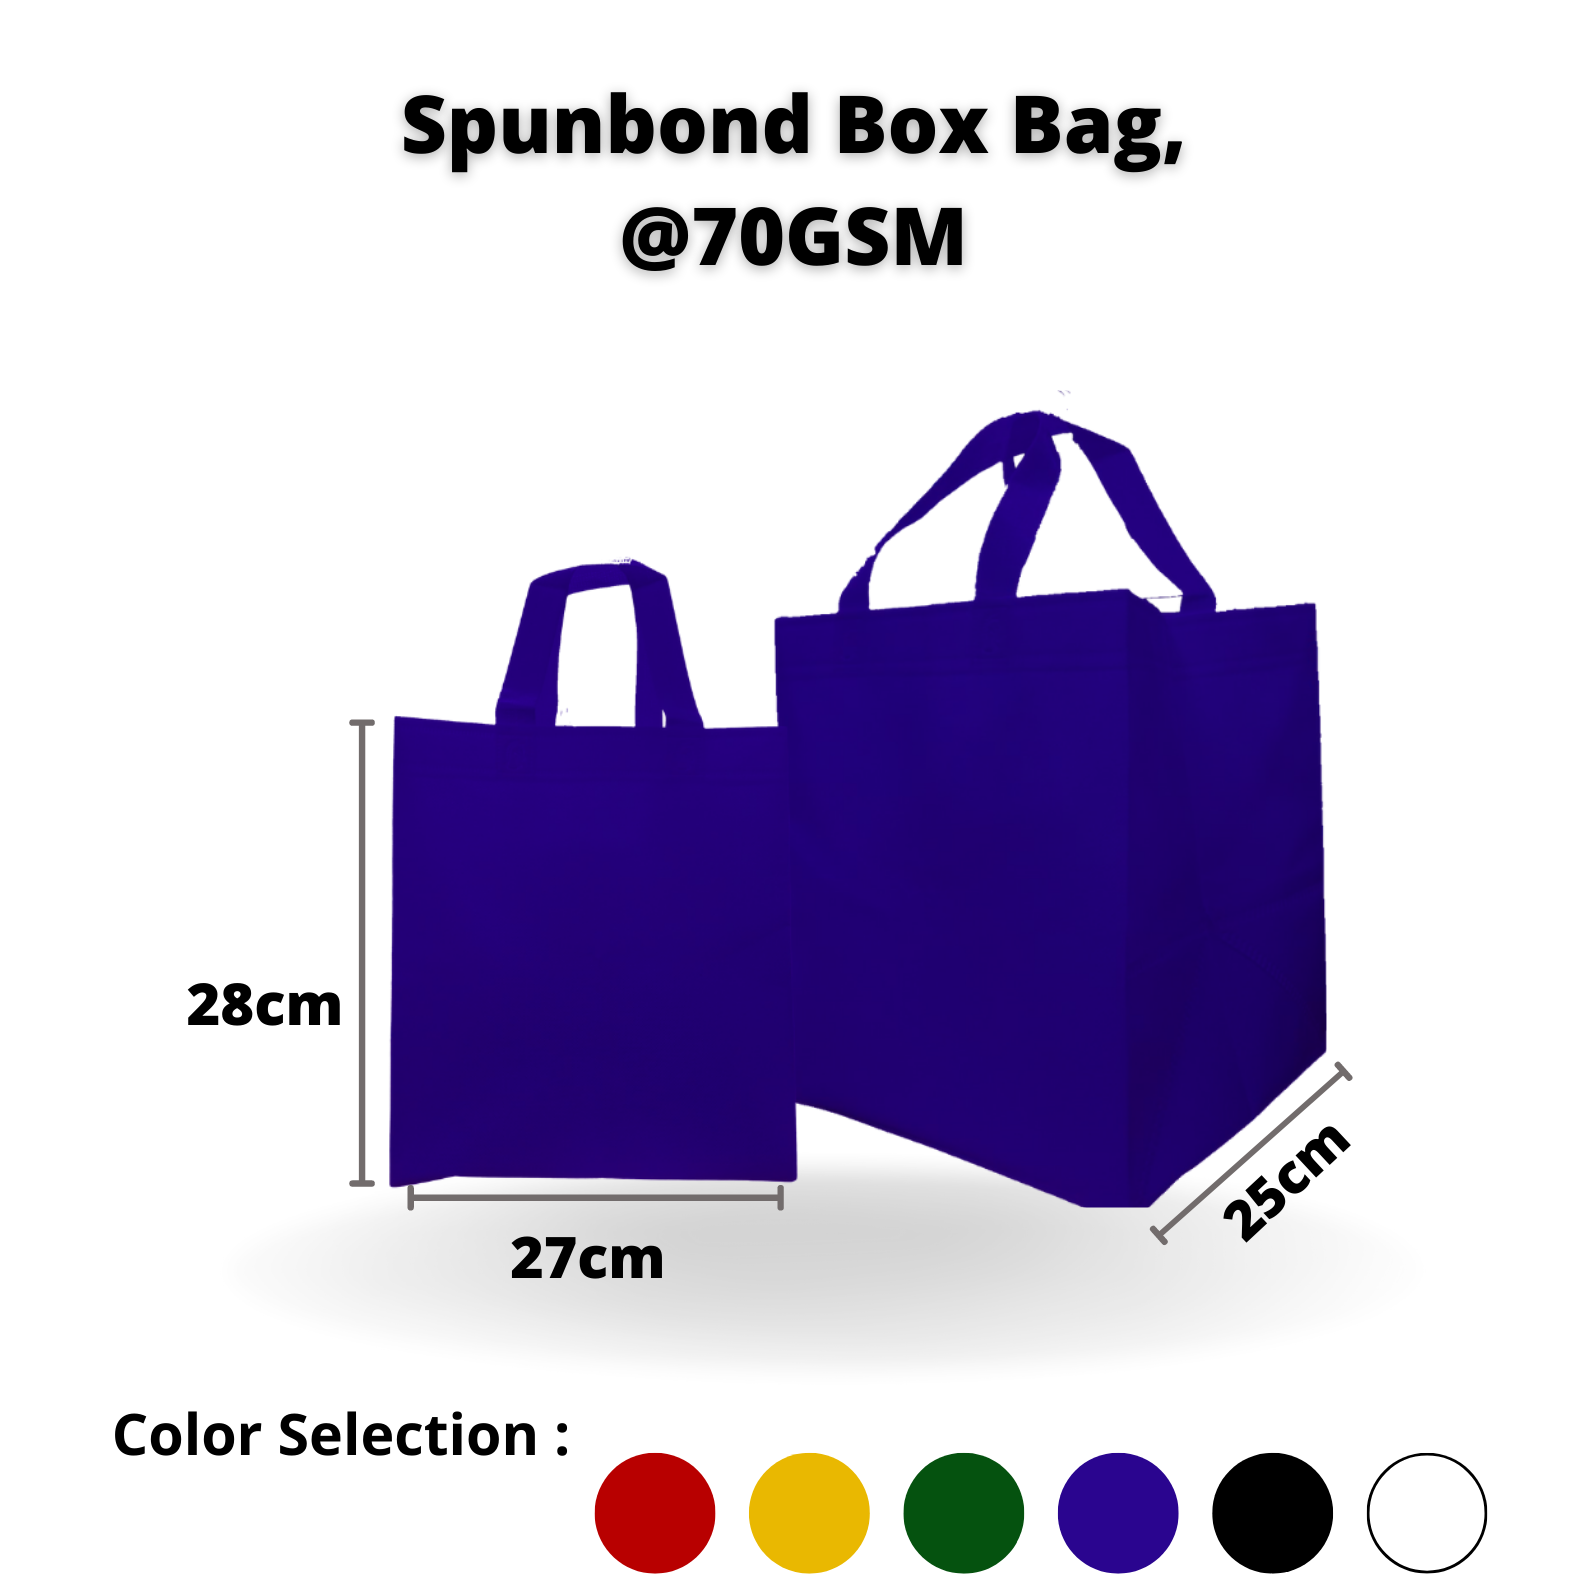 Spunbond Box Bag 27